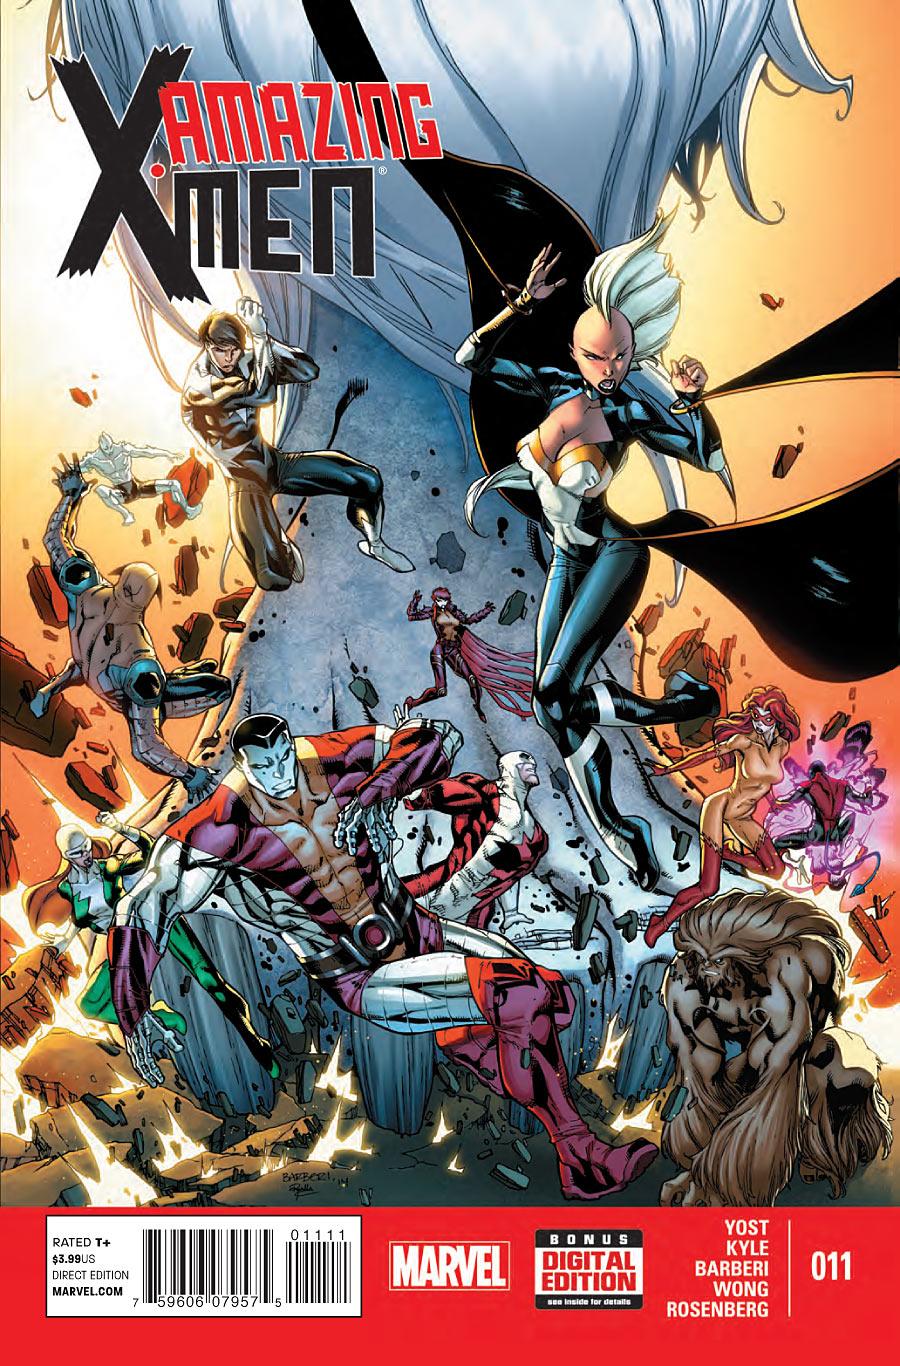 The Amazing X-Men Vol. 2 #11